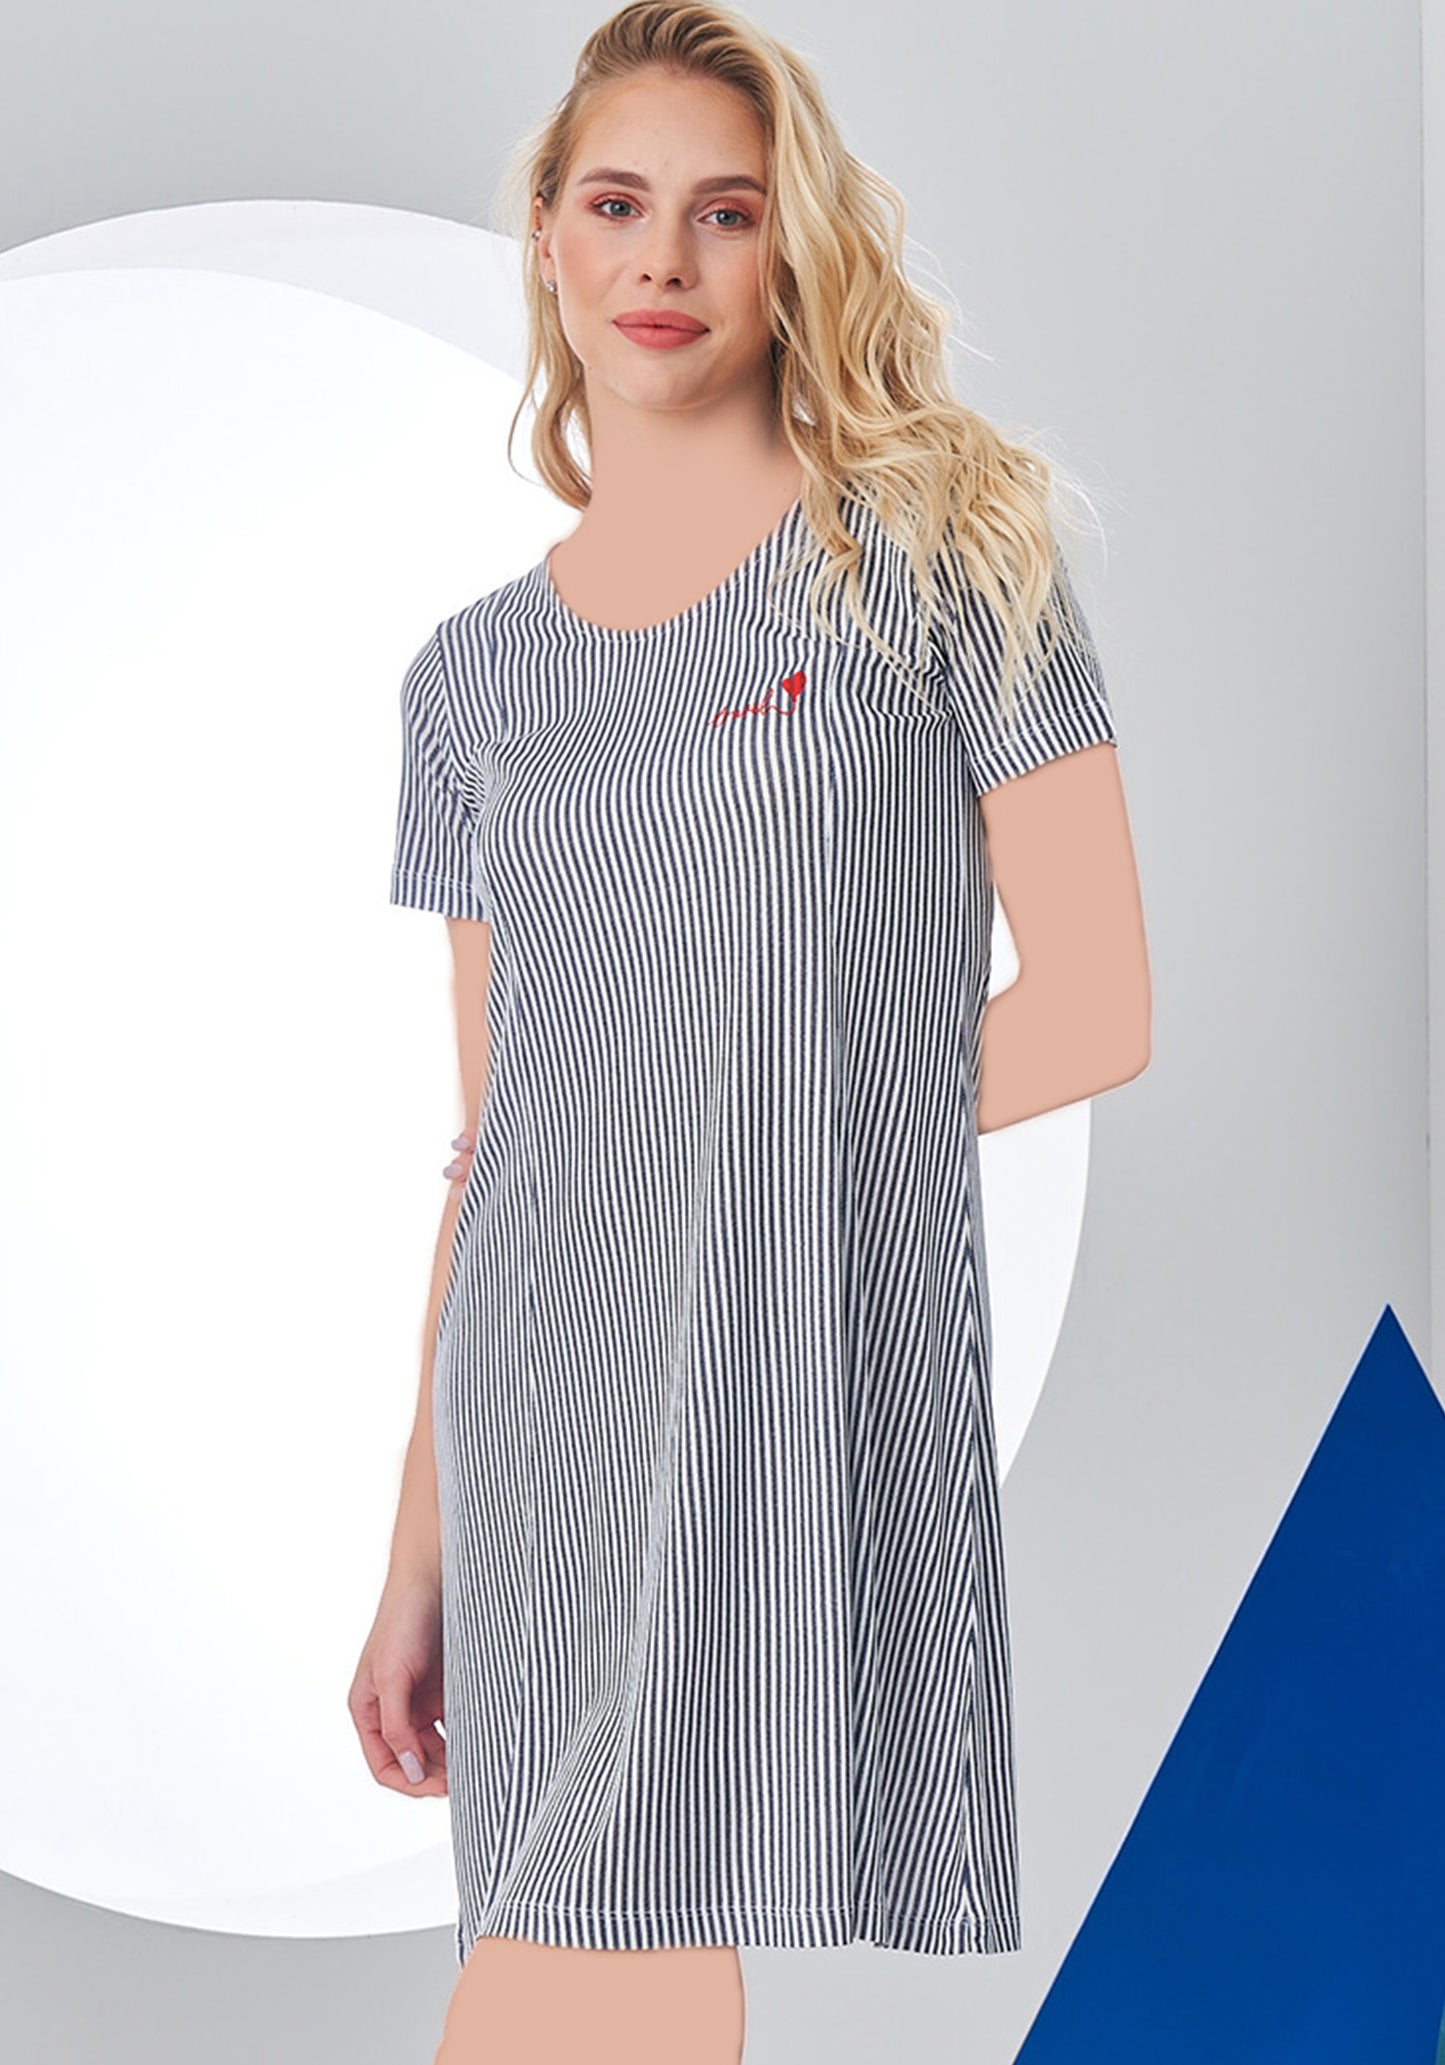 S&L Short Sleeve Grey Stripes Dress